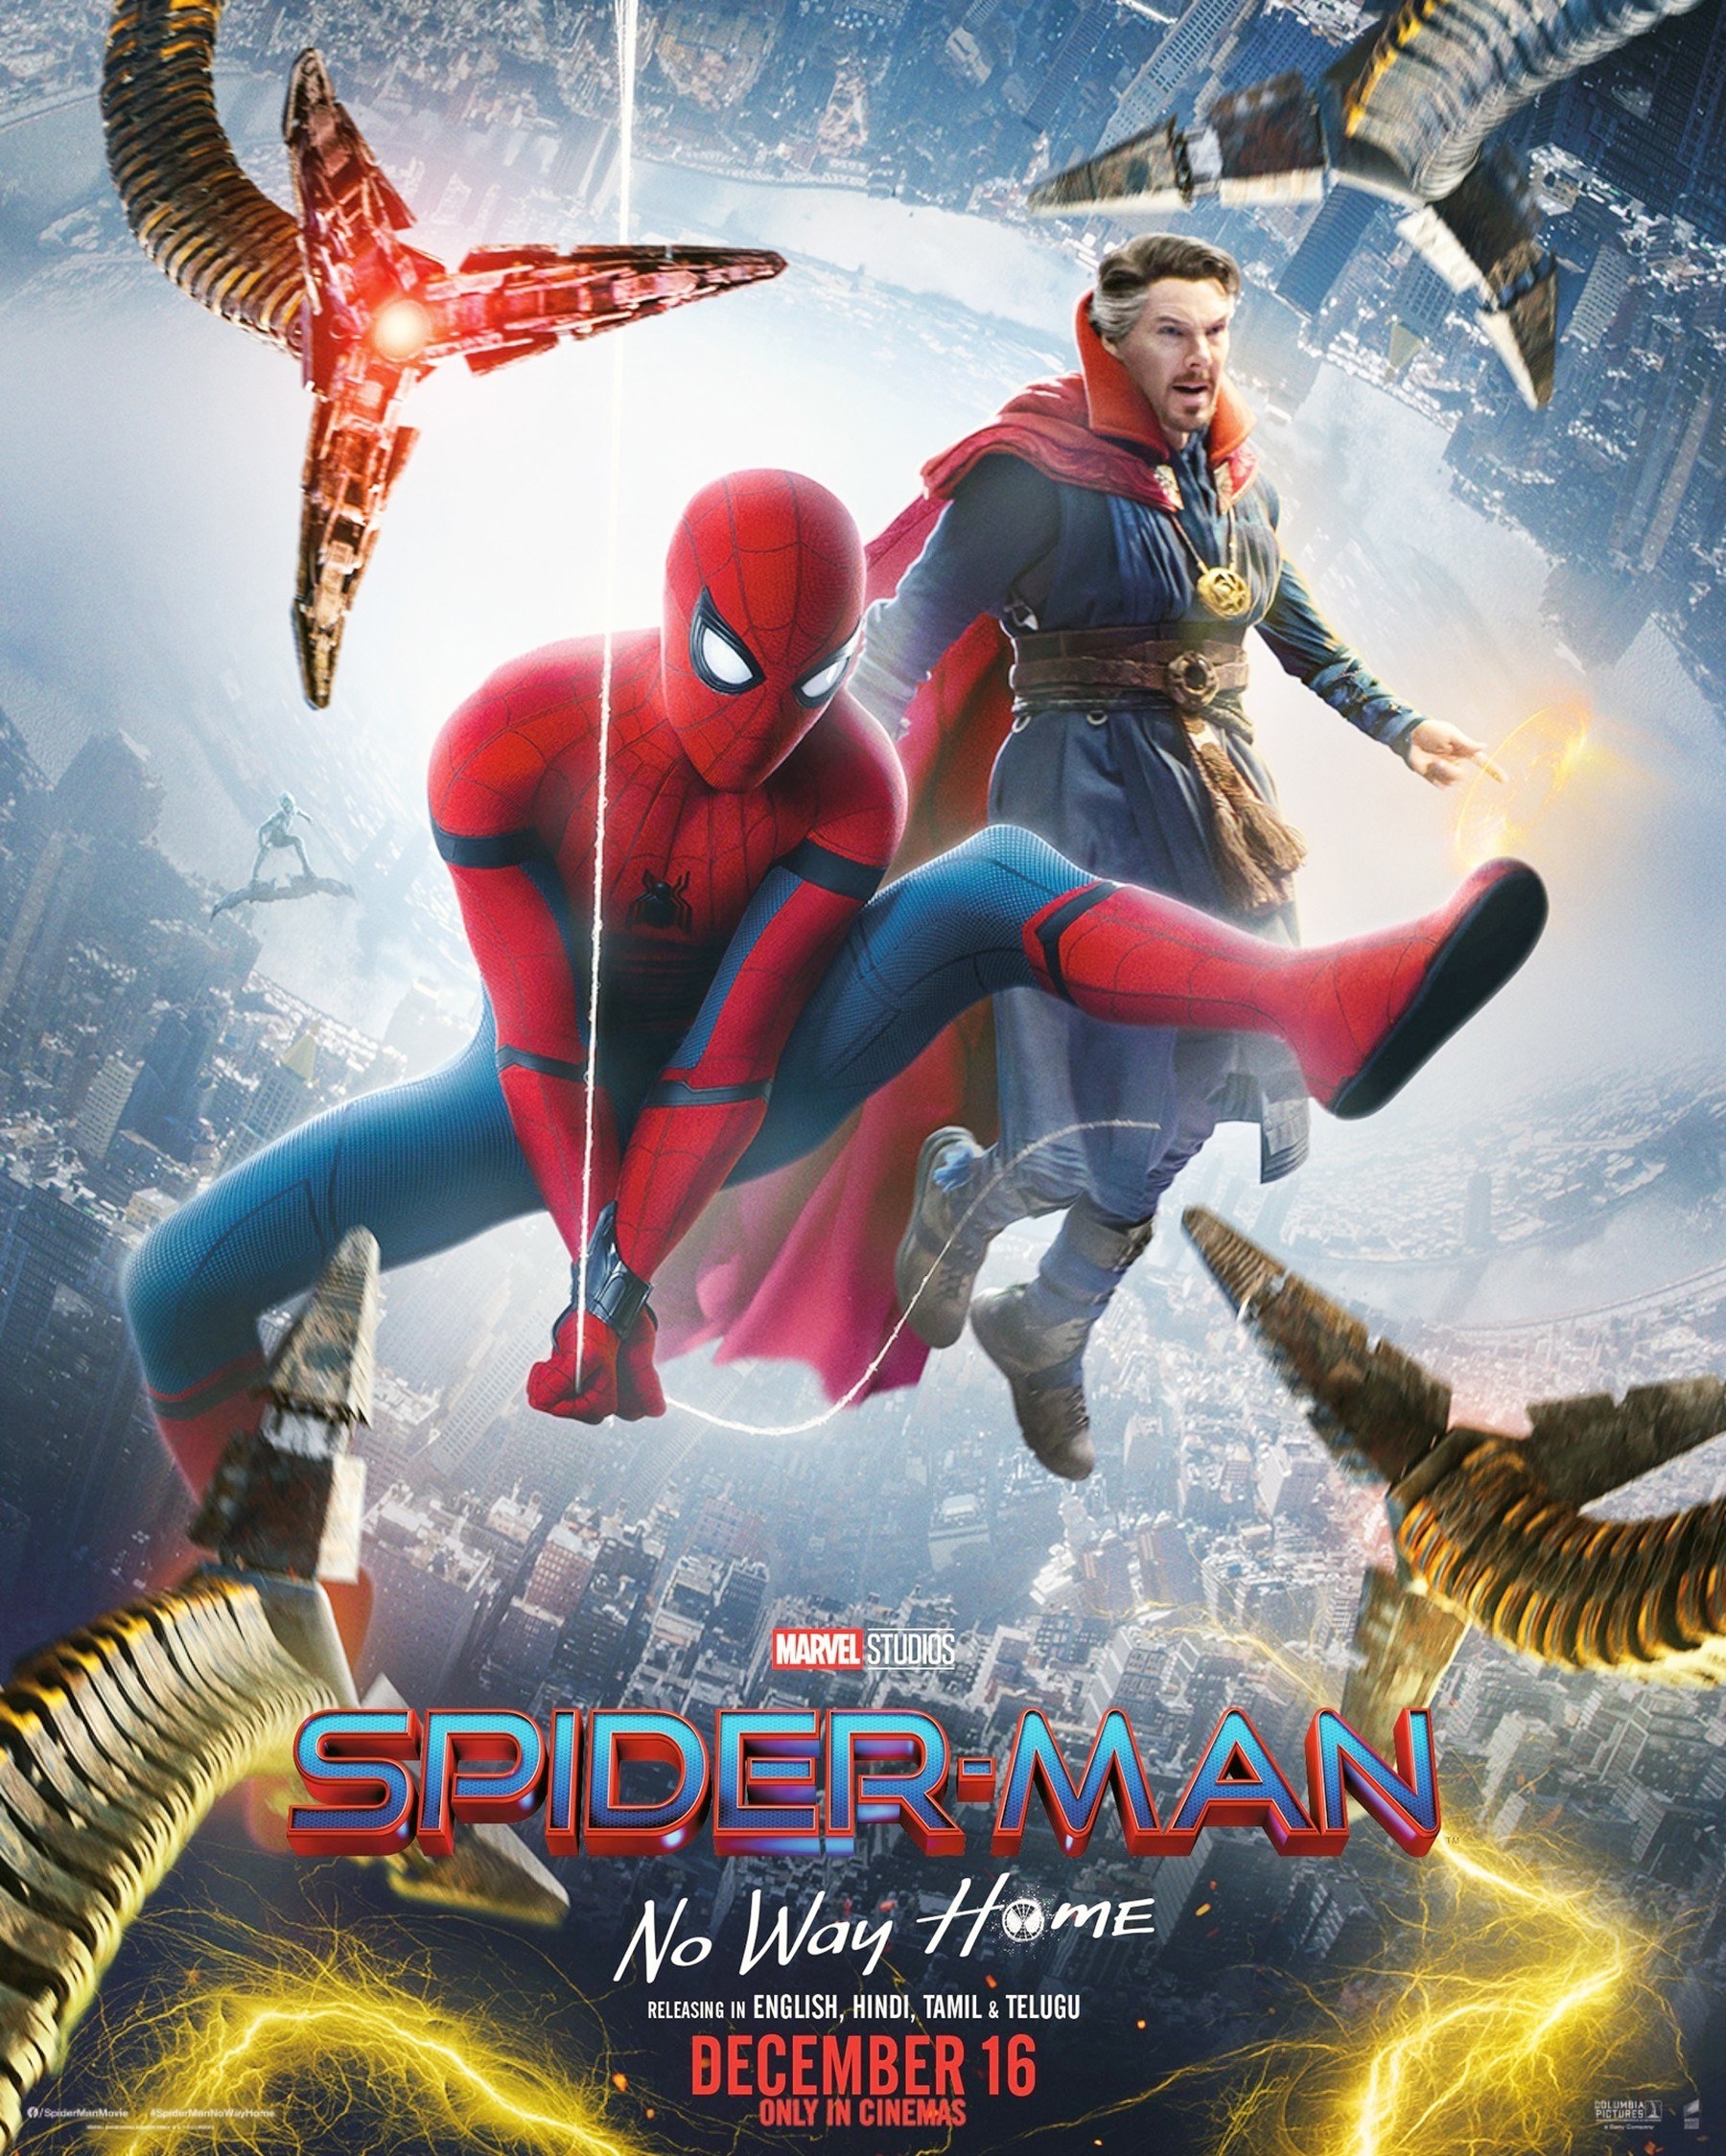 Dr. Strange and Spider-Man on the poster